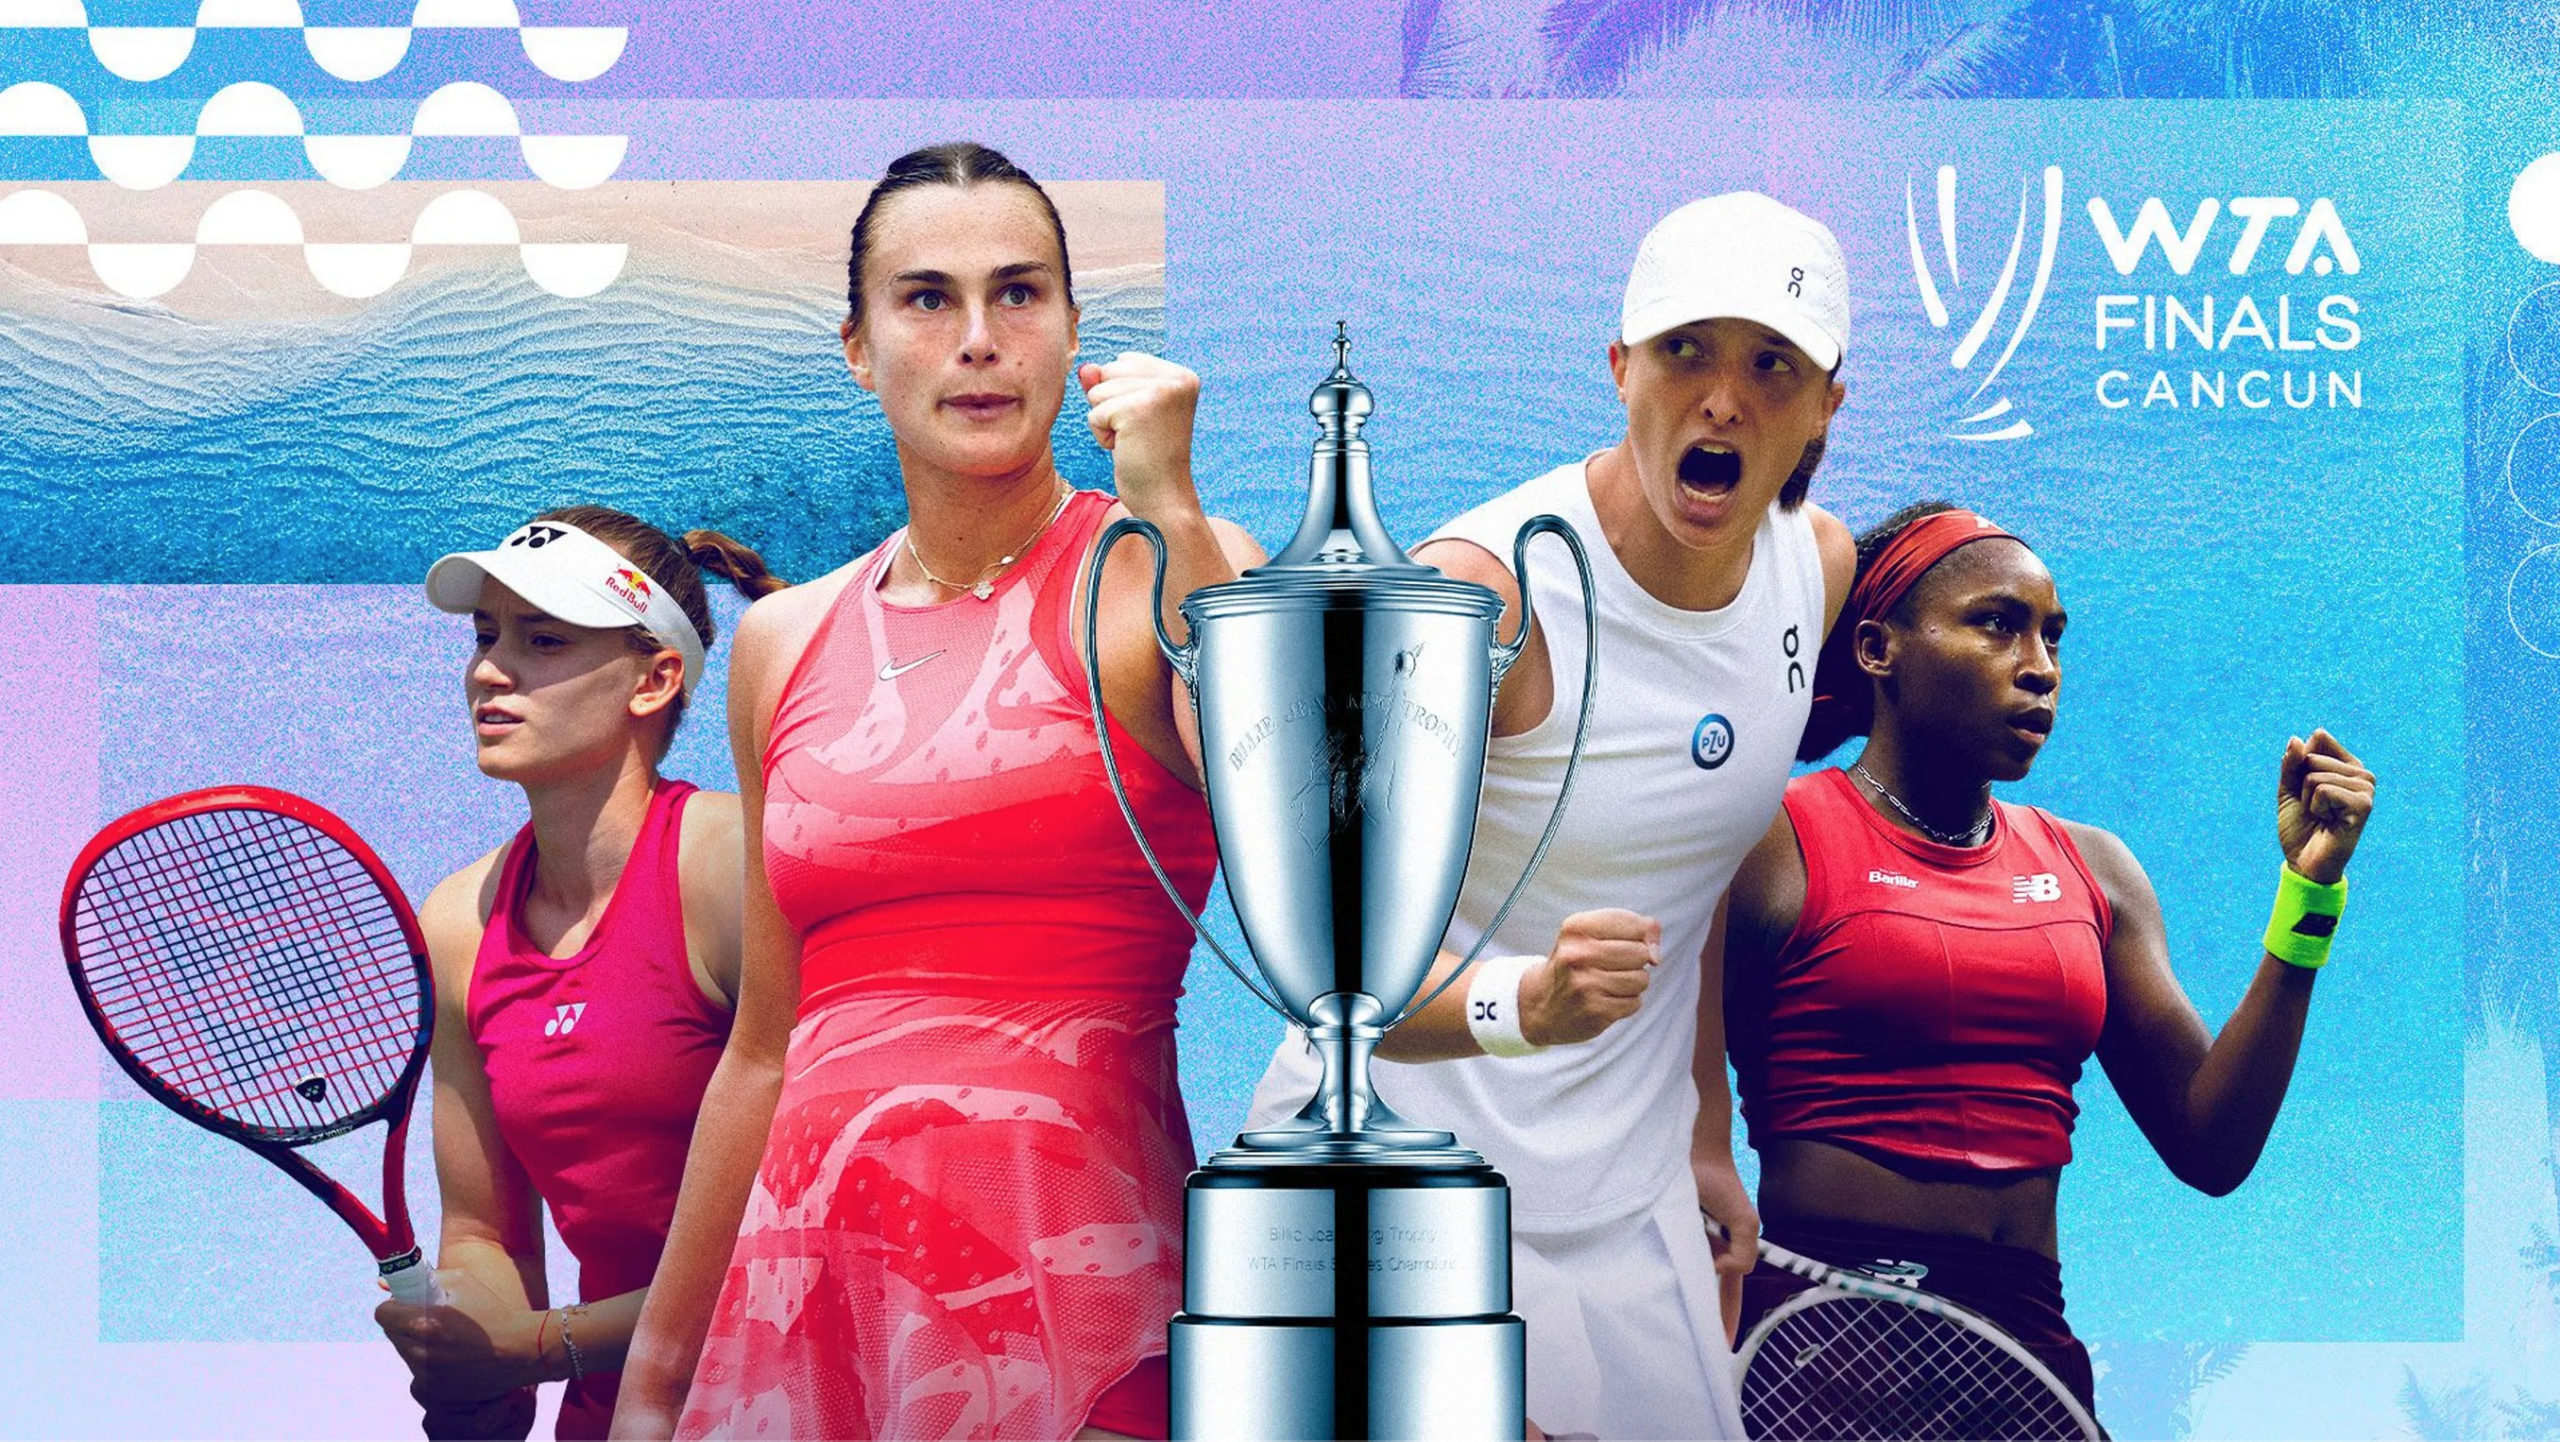 WTA Finals Cancun 